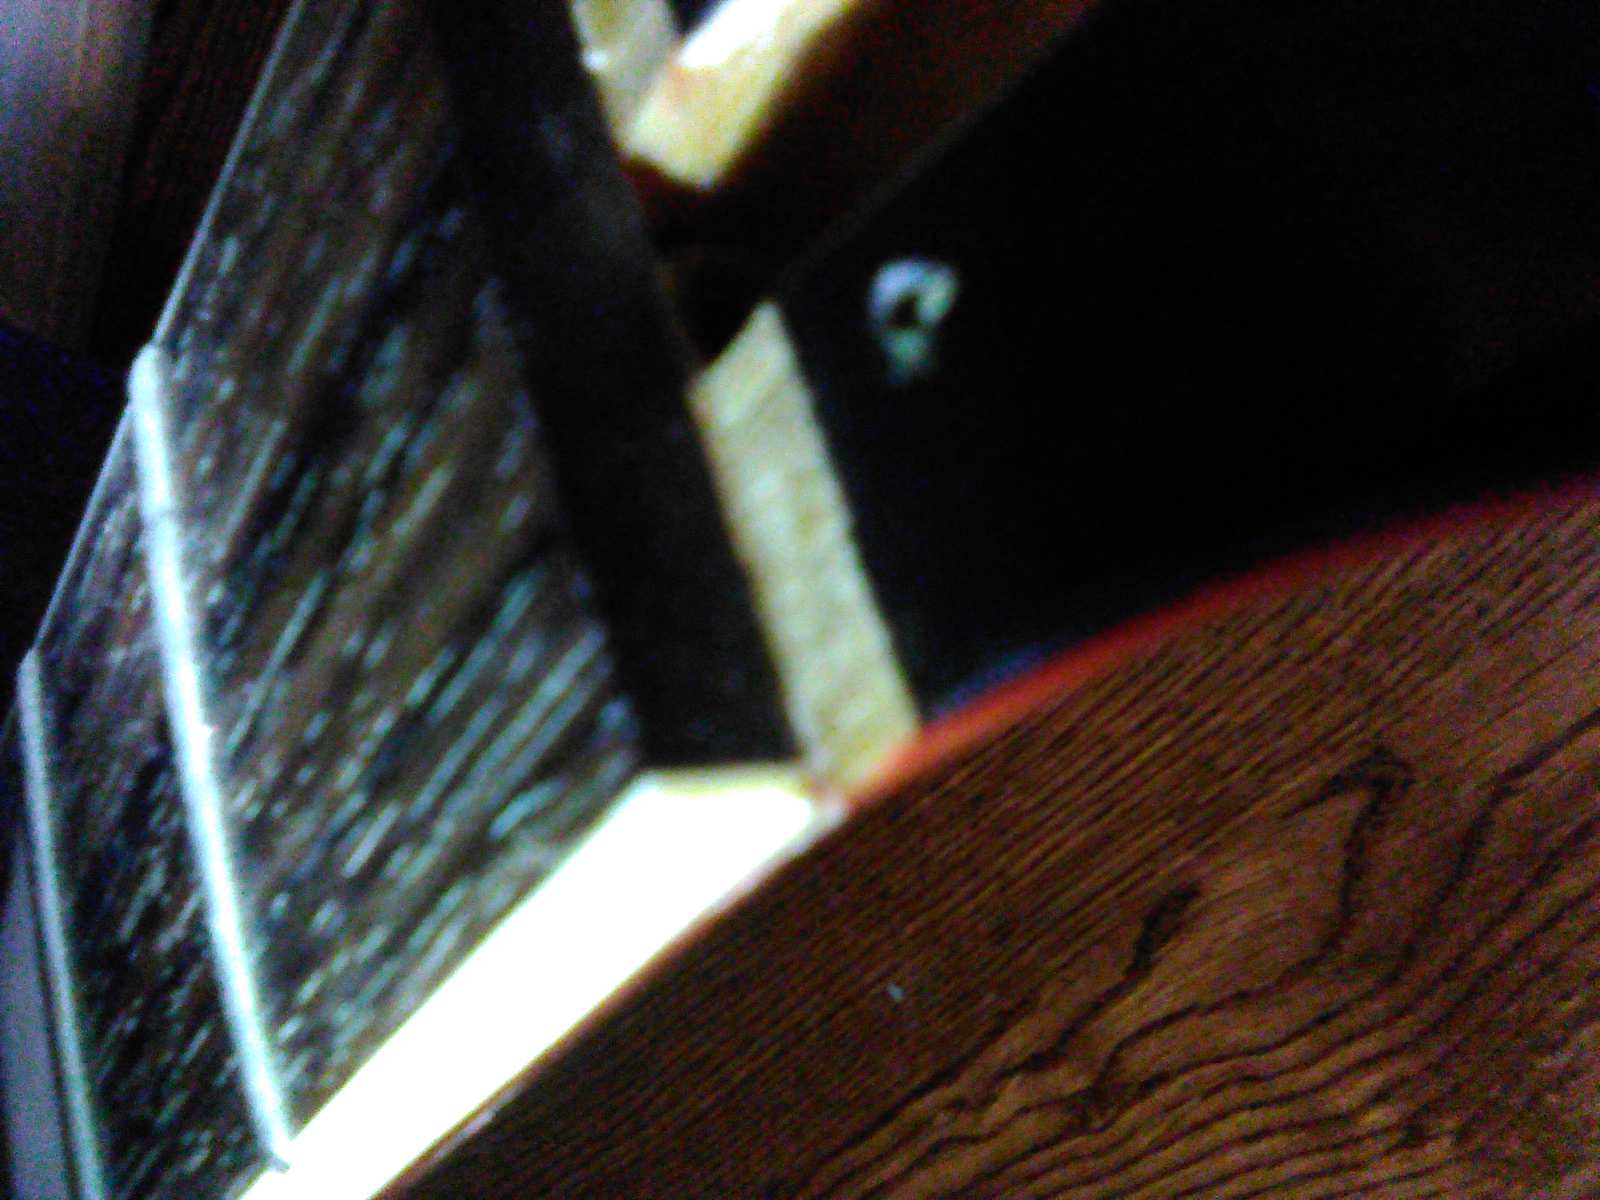 Respraying finish cracks in beater guitar-neck-6-jpg